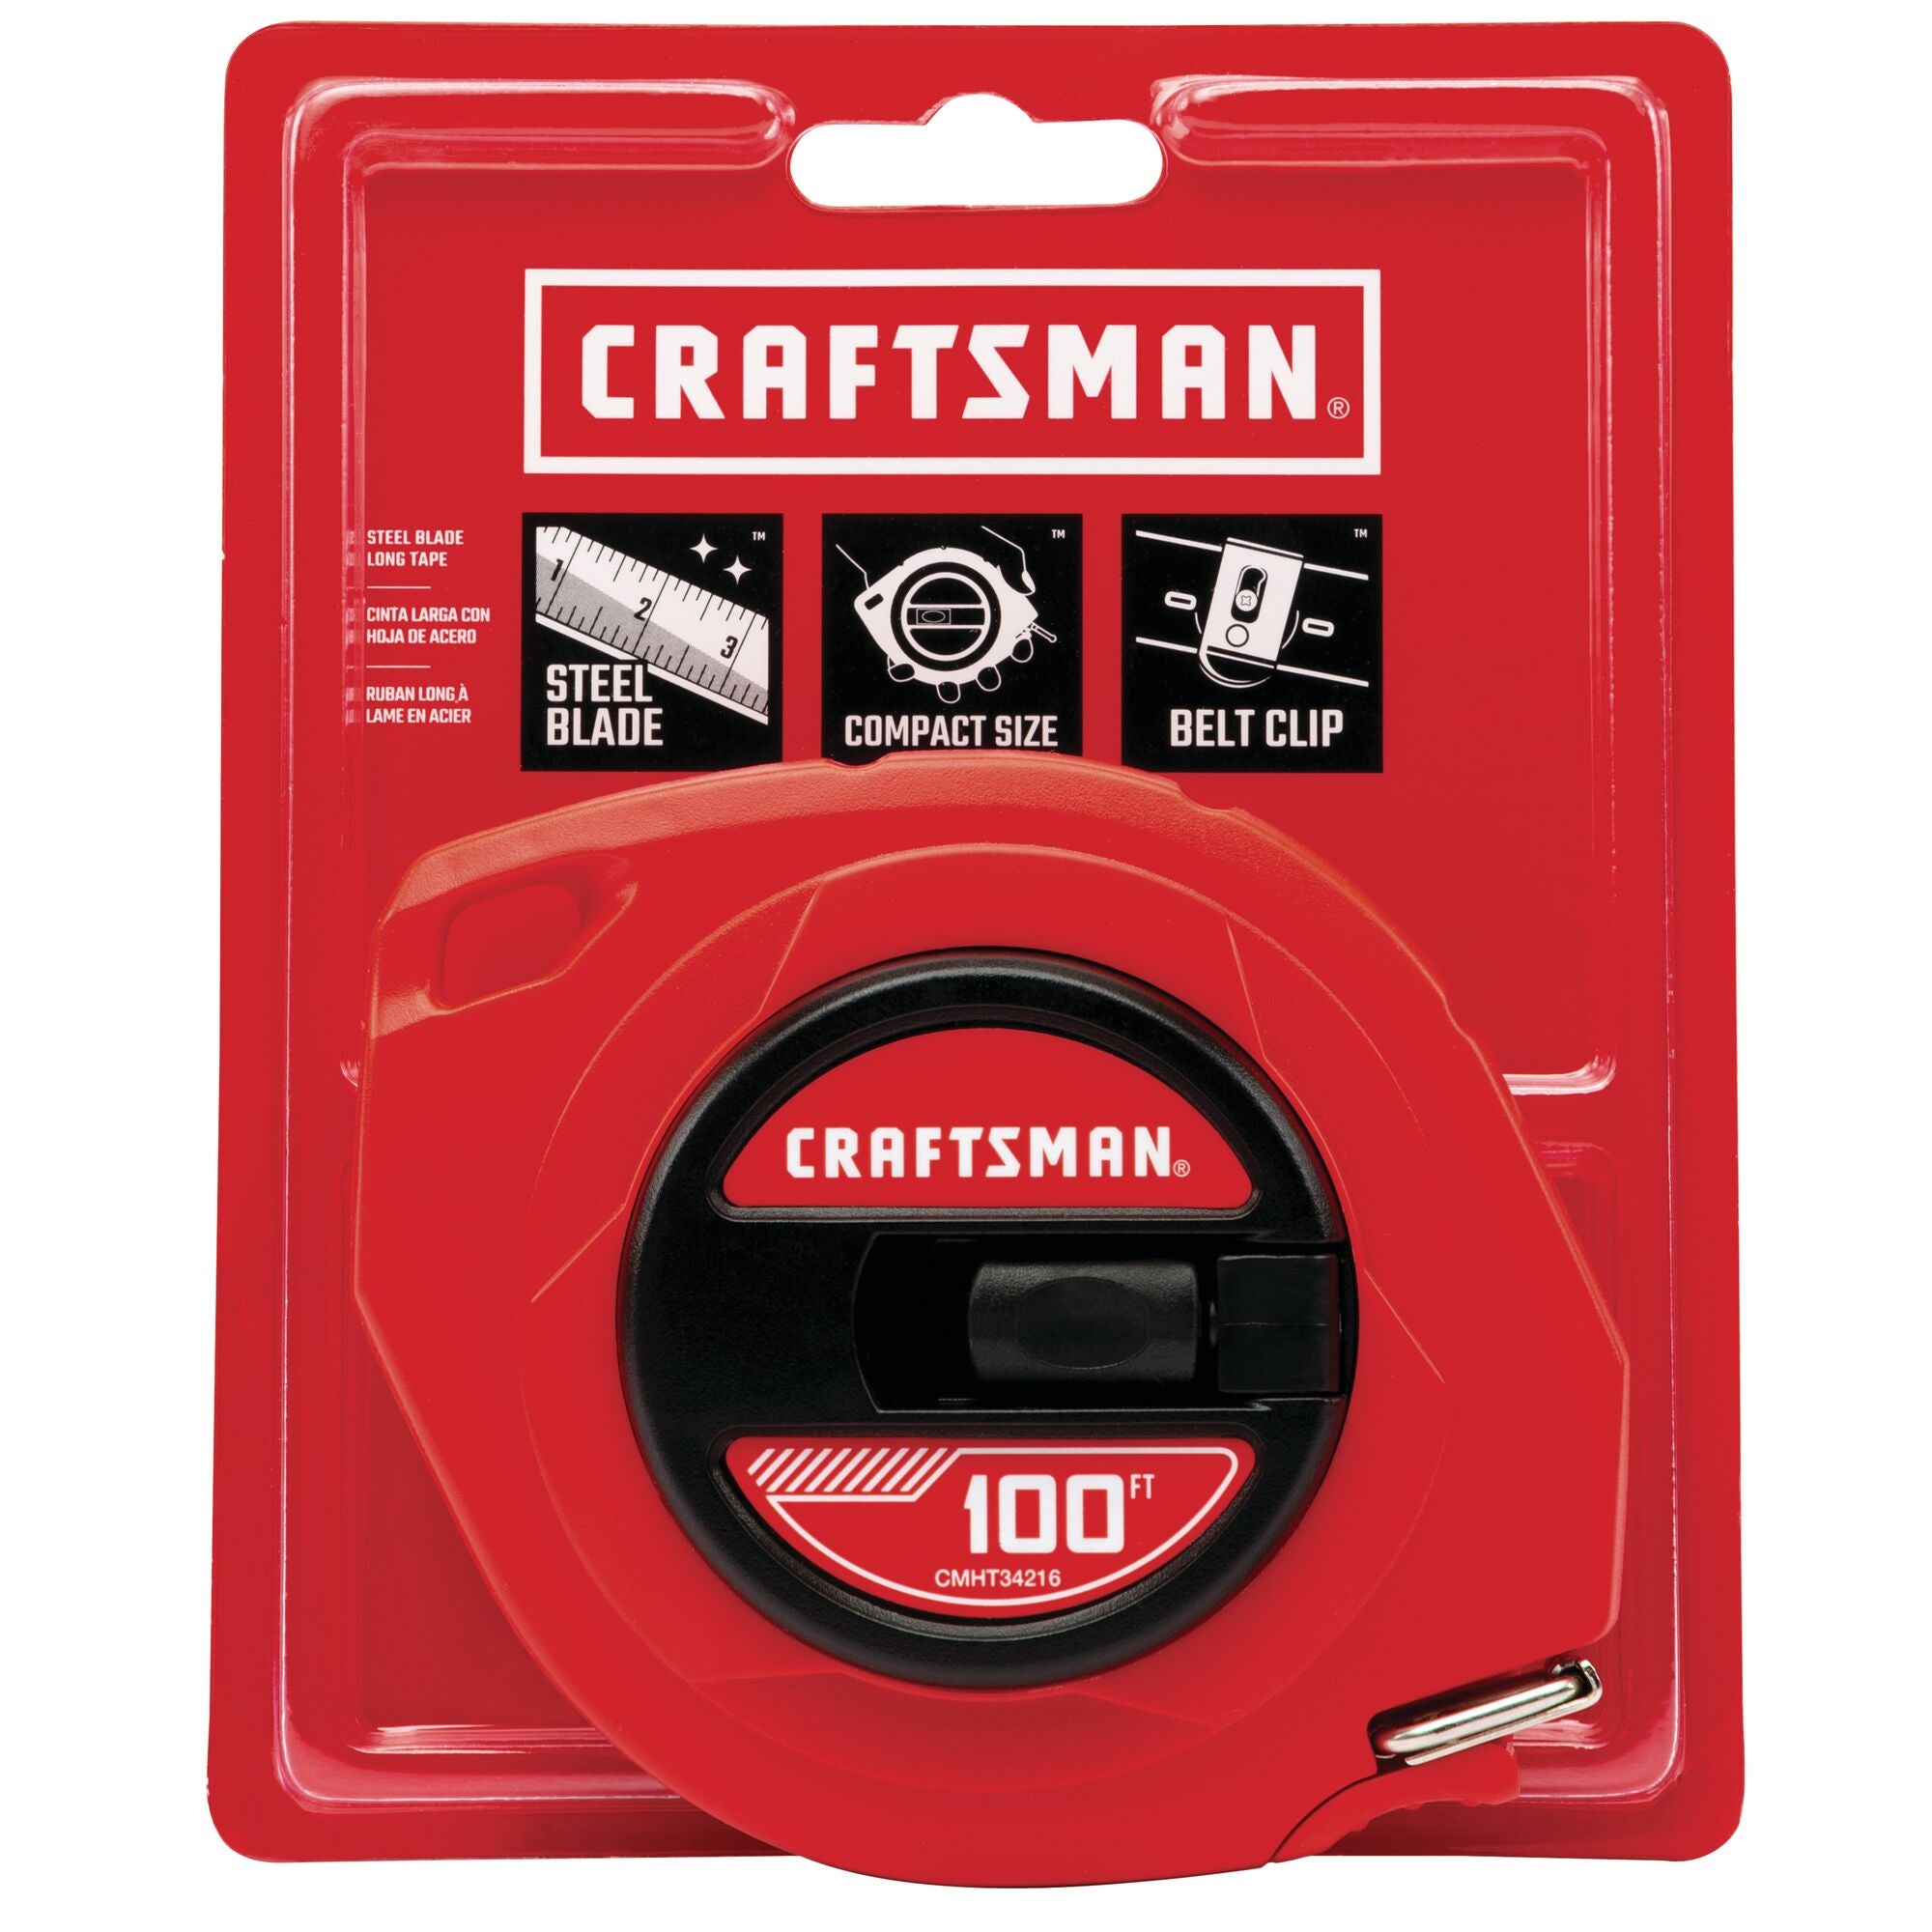 Craftsman cm 12ft Hi-Vis 2.0 Tape Measure Rubber | CMHT38212S